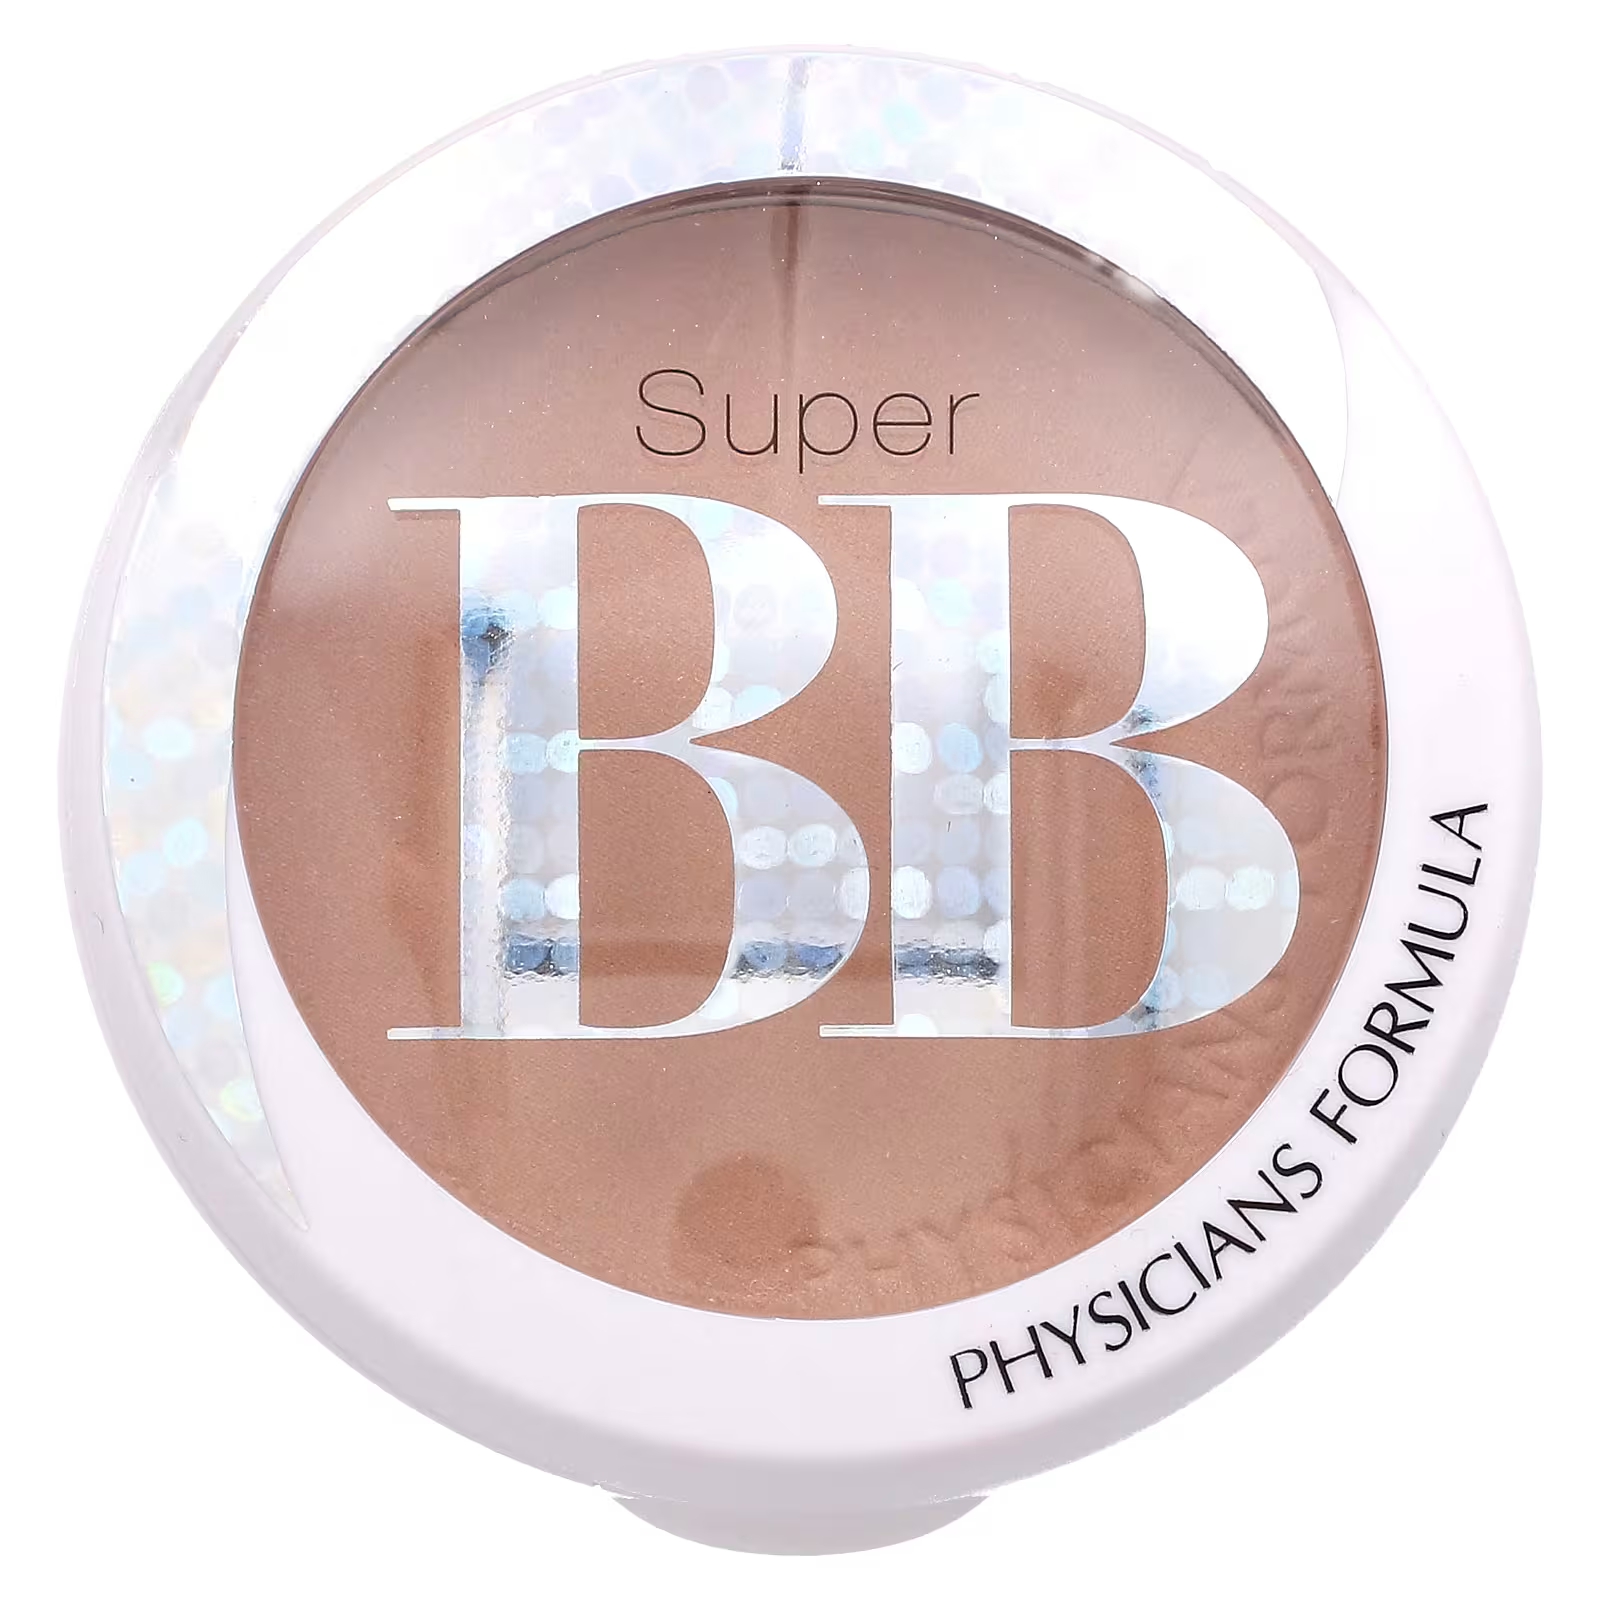 Super BB All-in-1 Beauty Balm Powder SPF 30 Легкий/средний 0,29 унции (8,3 г) Physicians Formula physicians formula super bb крем бальзам все в 1 spf 30 легкий 35 мл 1 2 жидк унции